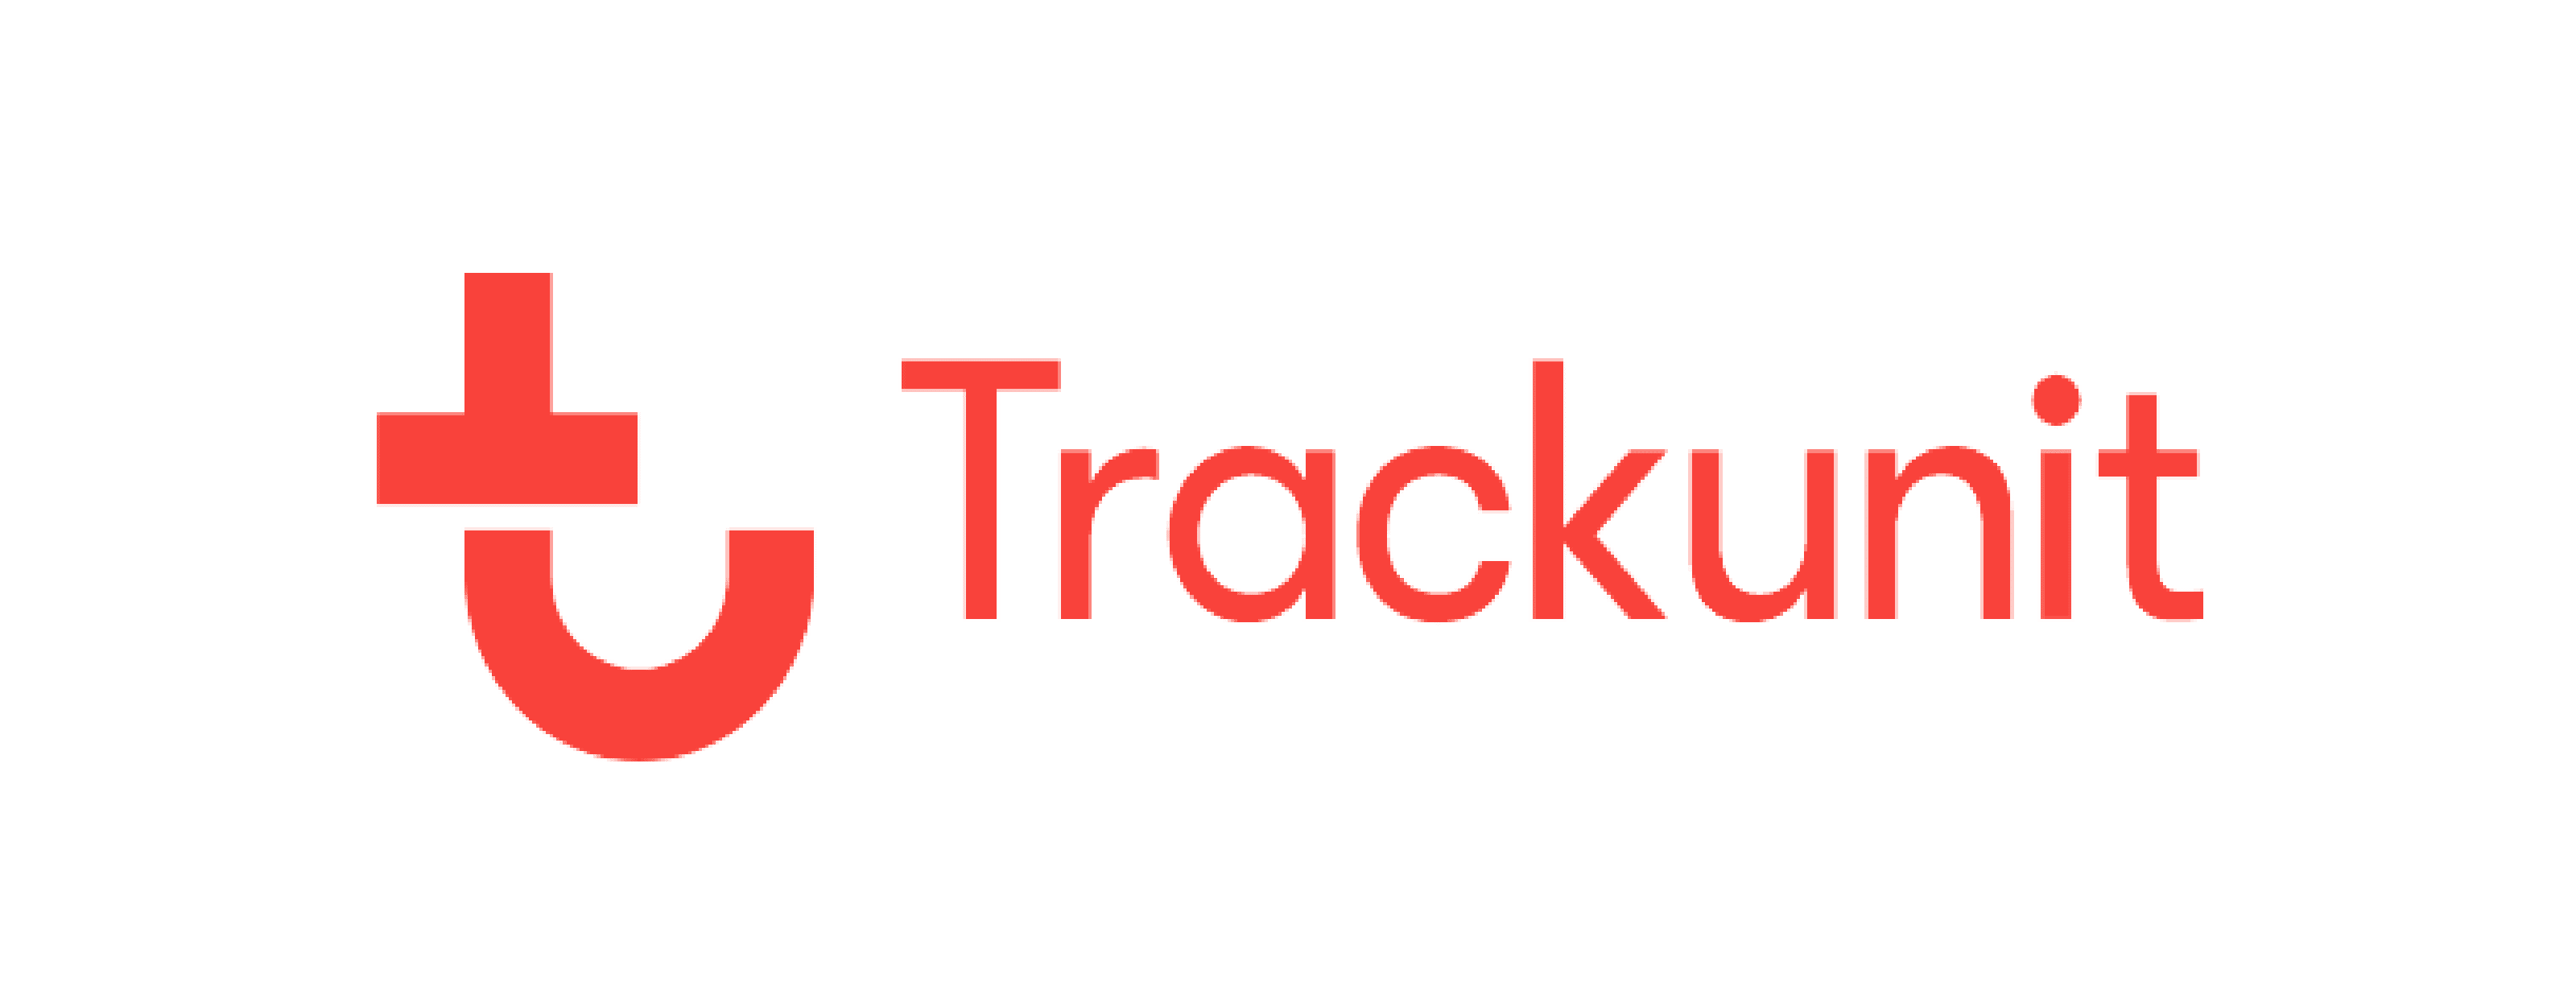 Trackunit logo